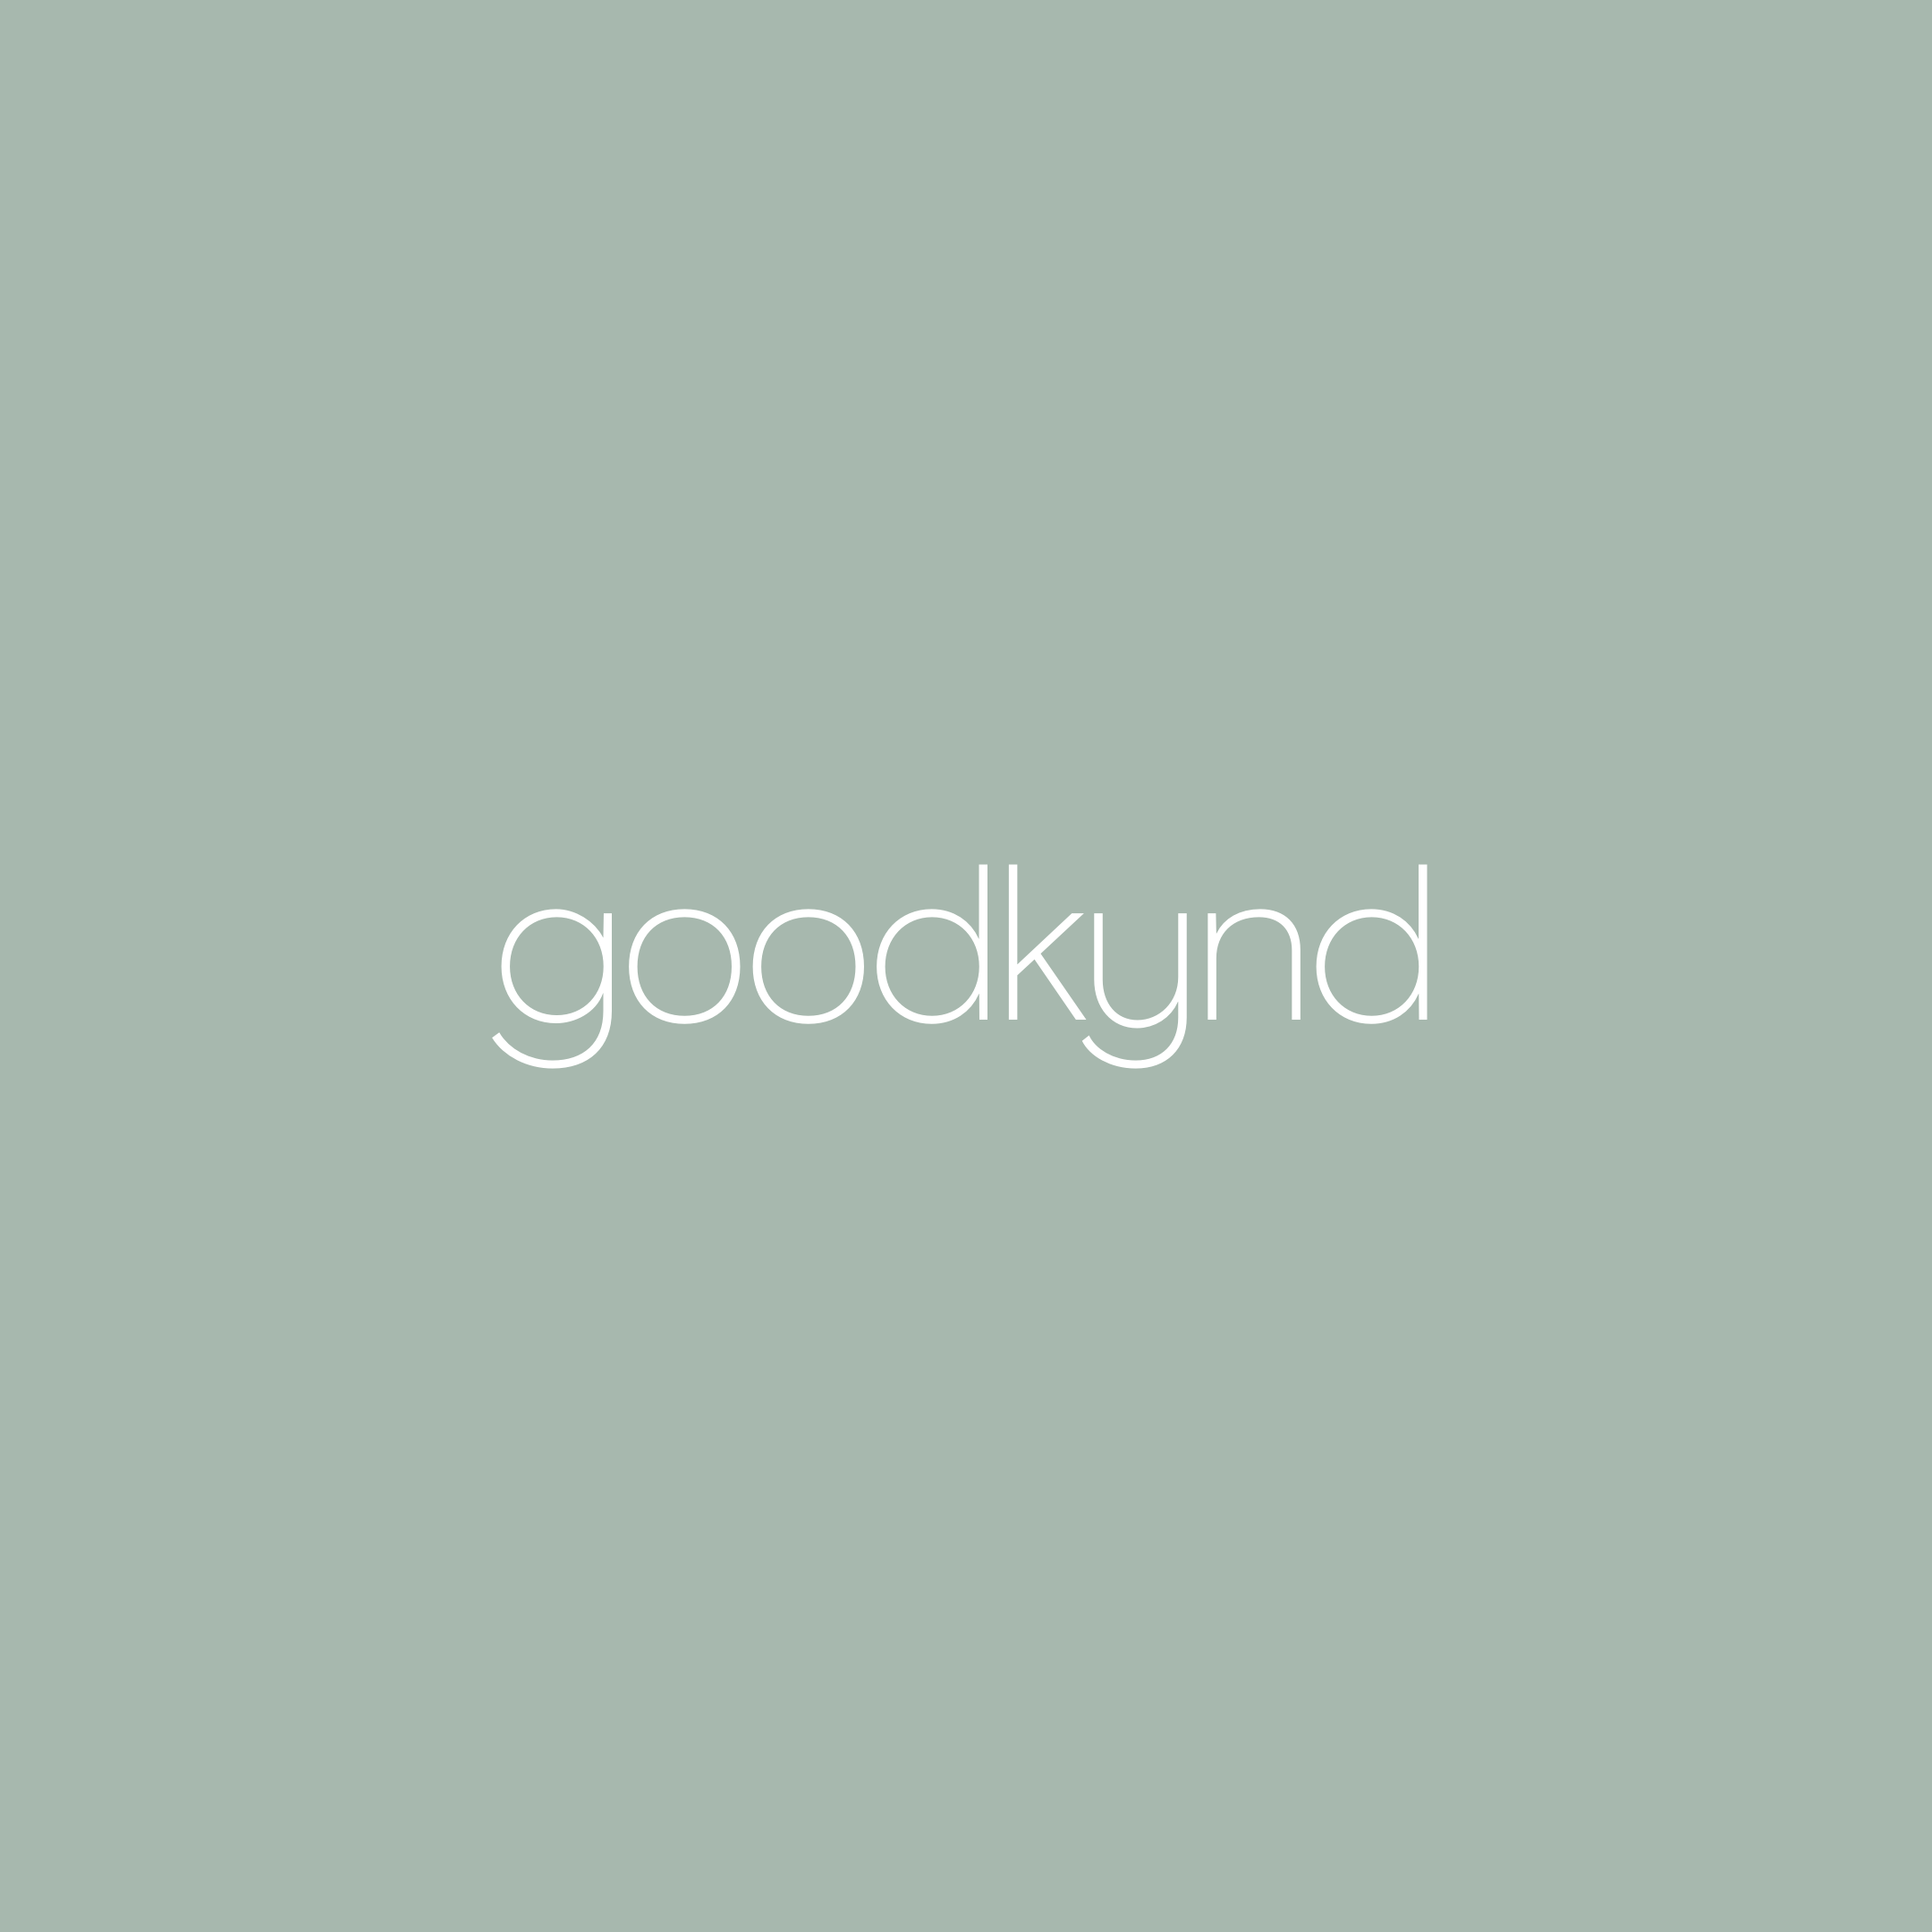 goodkynd's logo